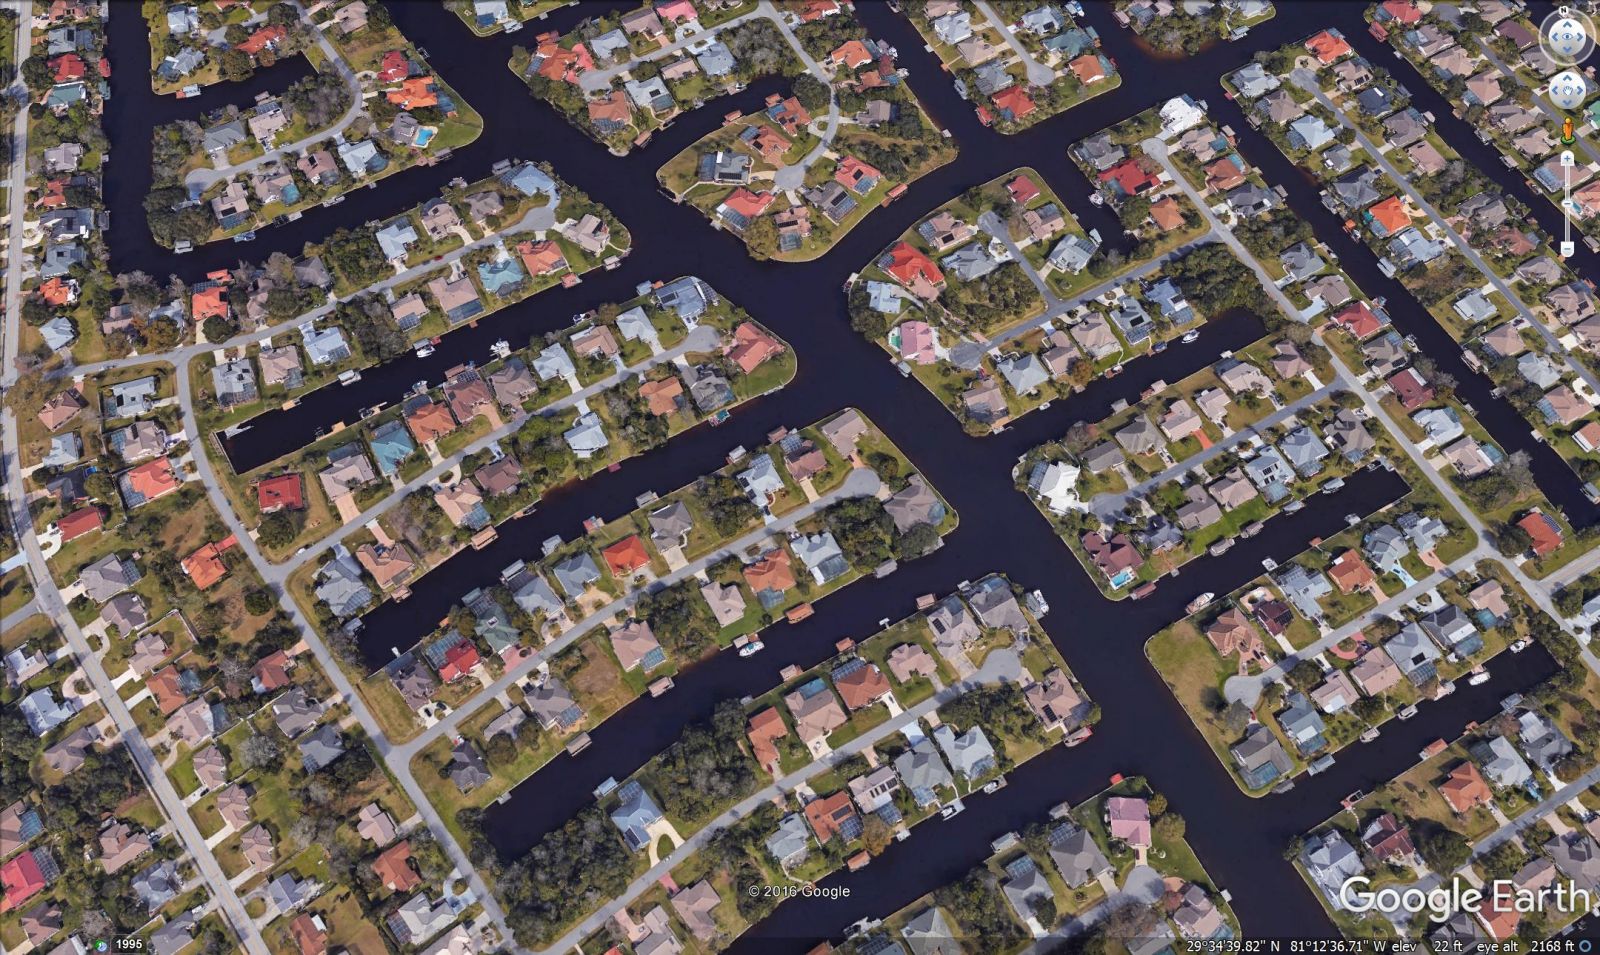 C-Section of Palm Coast, FL - Google Earth